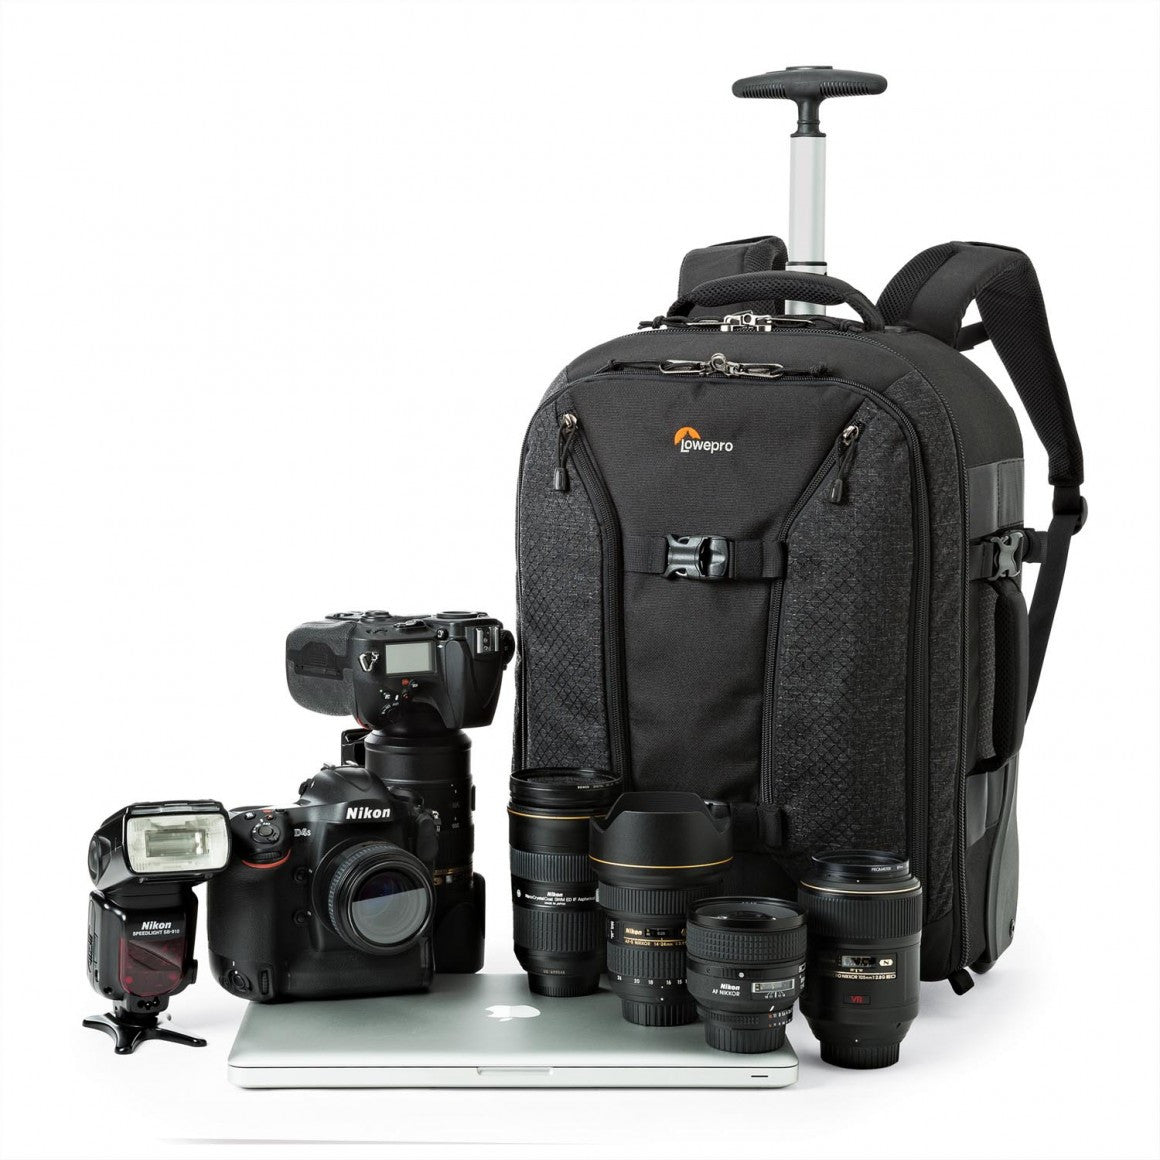 Lowepro Pro Runner RL x450 AW II Backpack (Black), bags roller bags, Lowepro - Pictureline  - 5